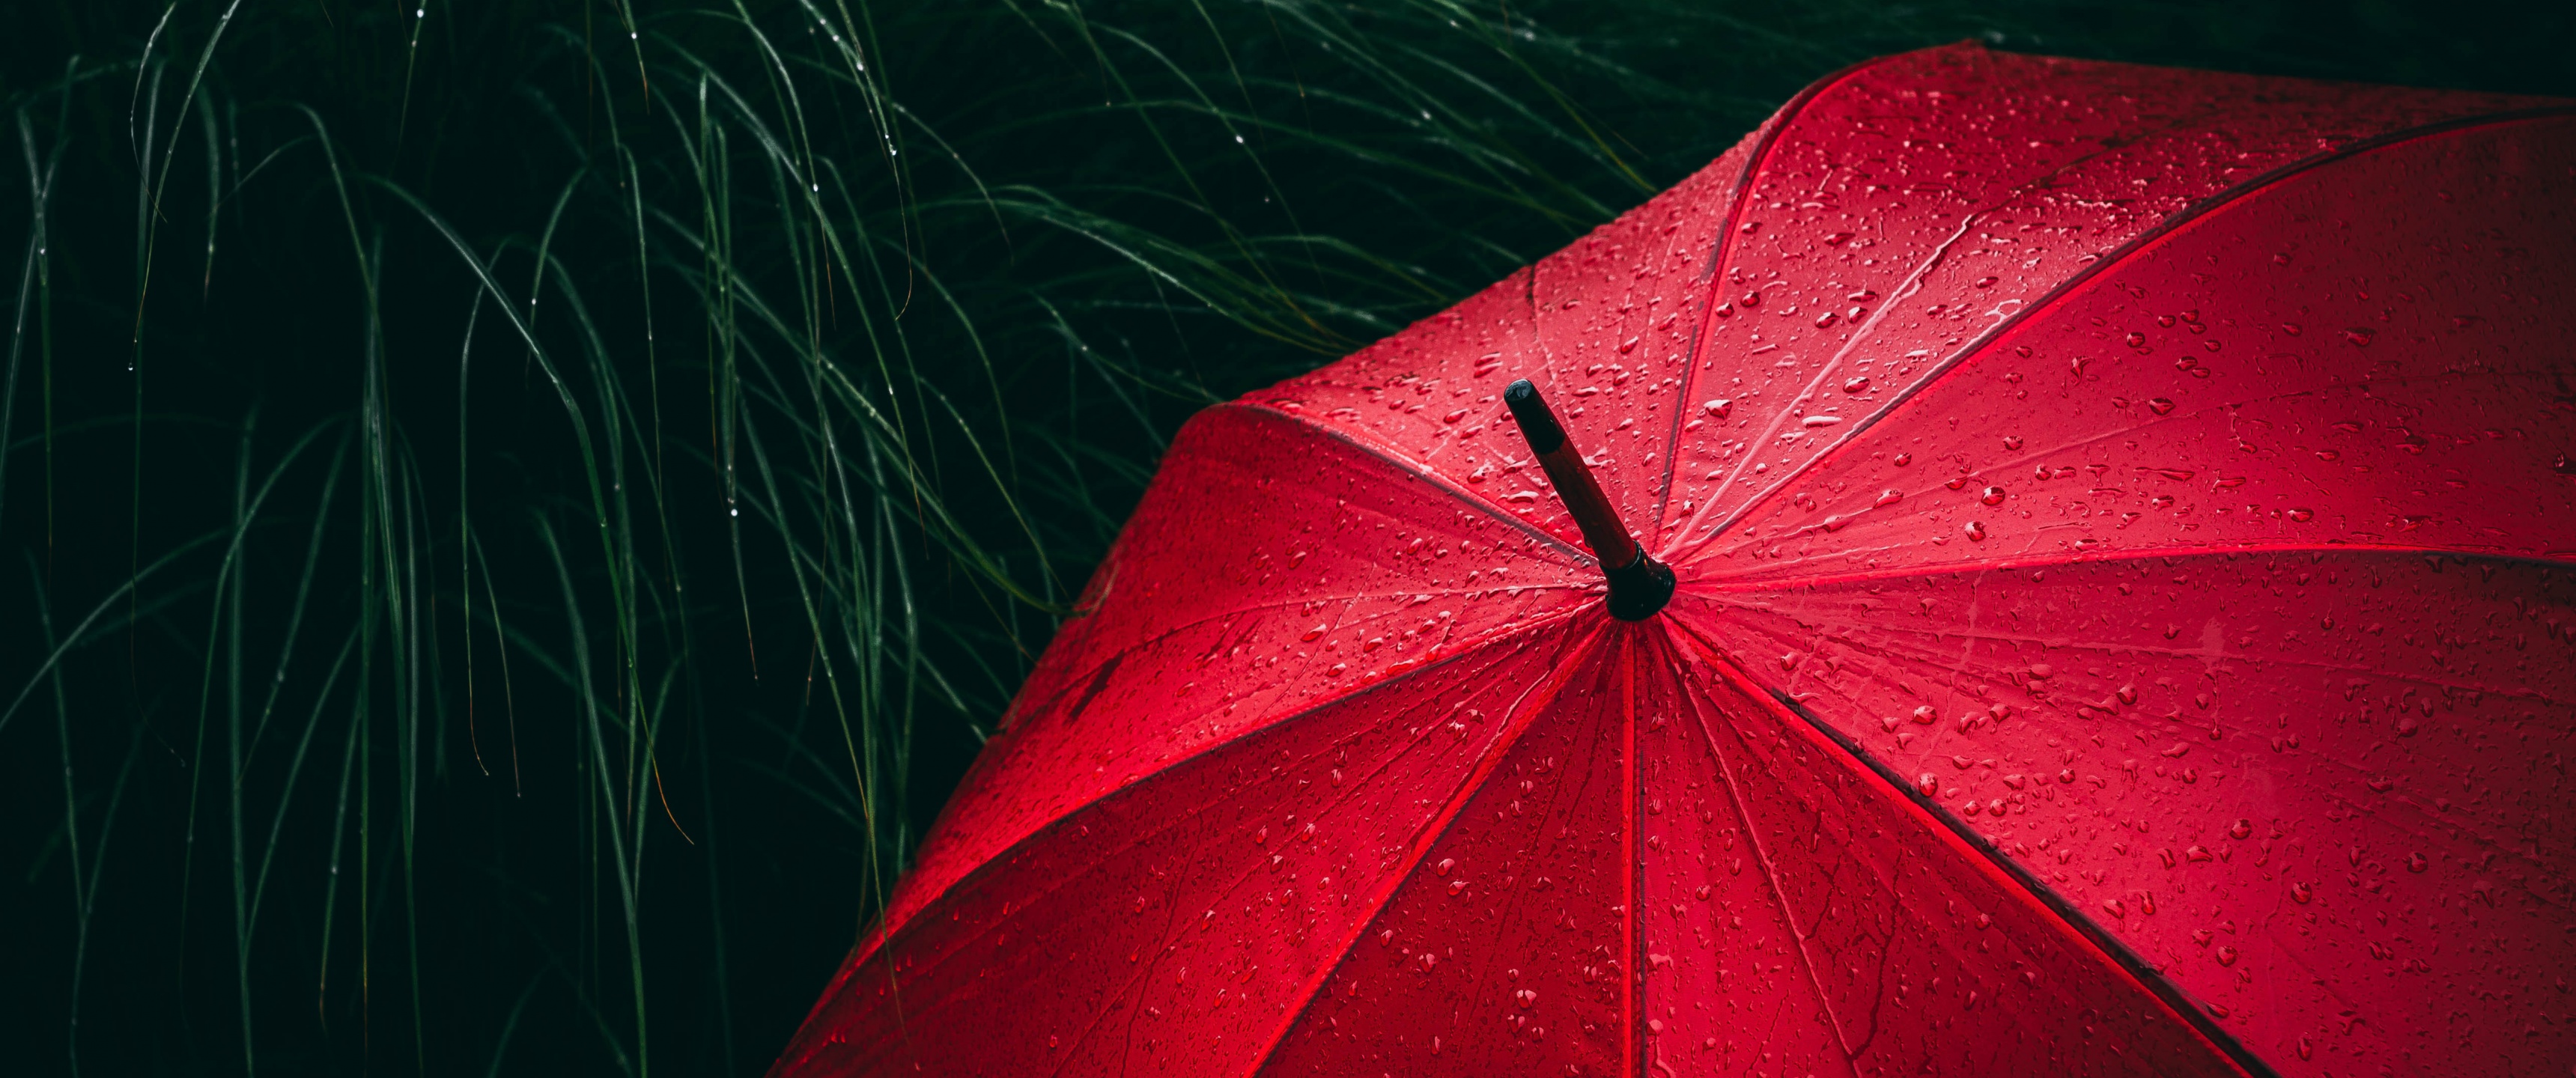 Umbrella Wallpaper 4K, Red, Rain droplets, Rainy day, 5K, Photography